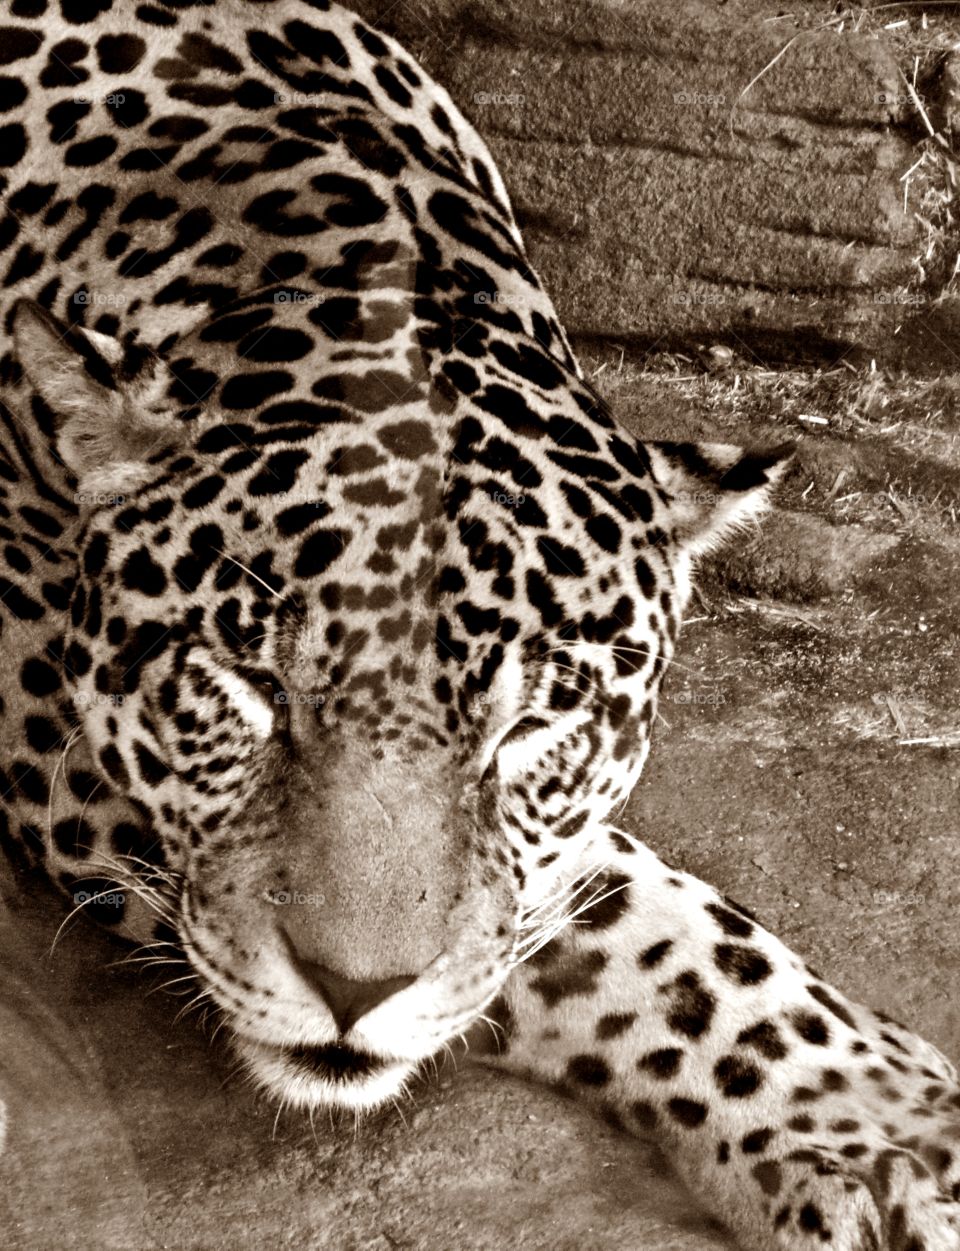 Napping Jaguar